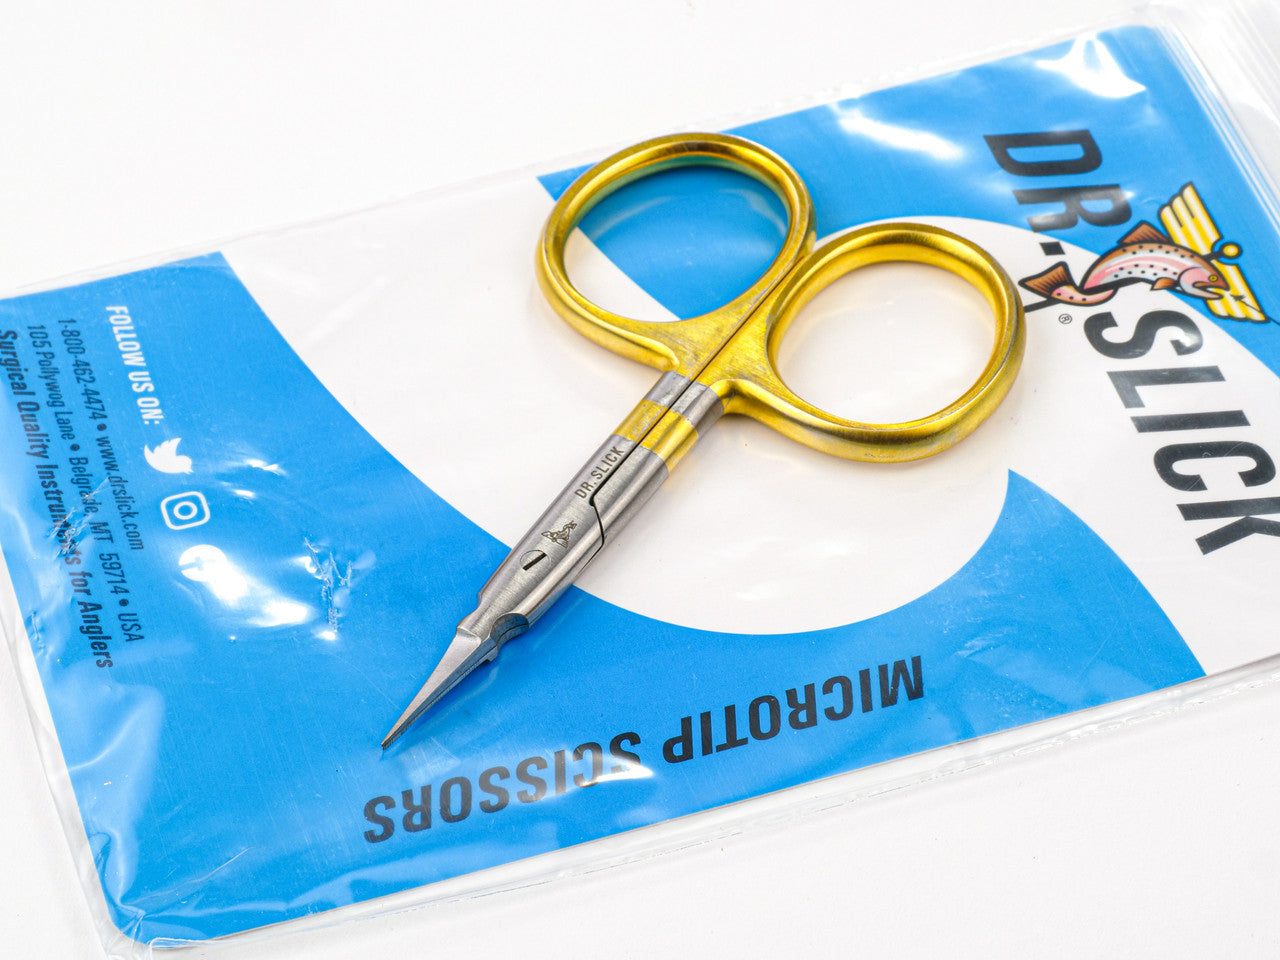 Dr. Slick 4 All Purpose Scissors